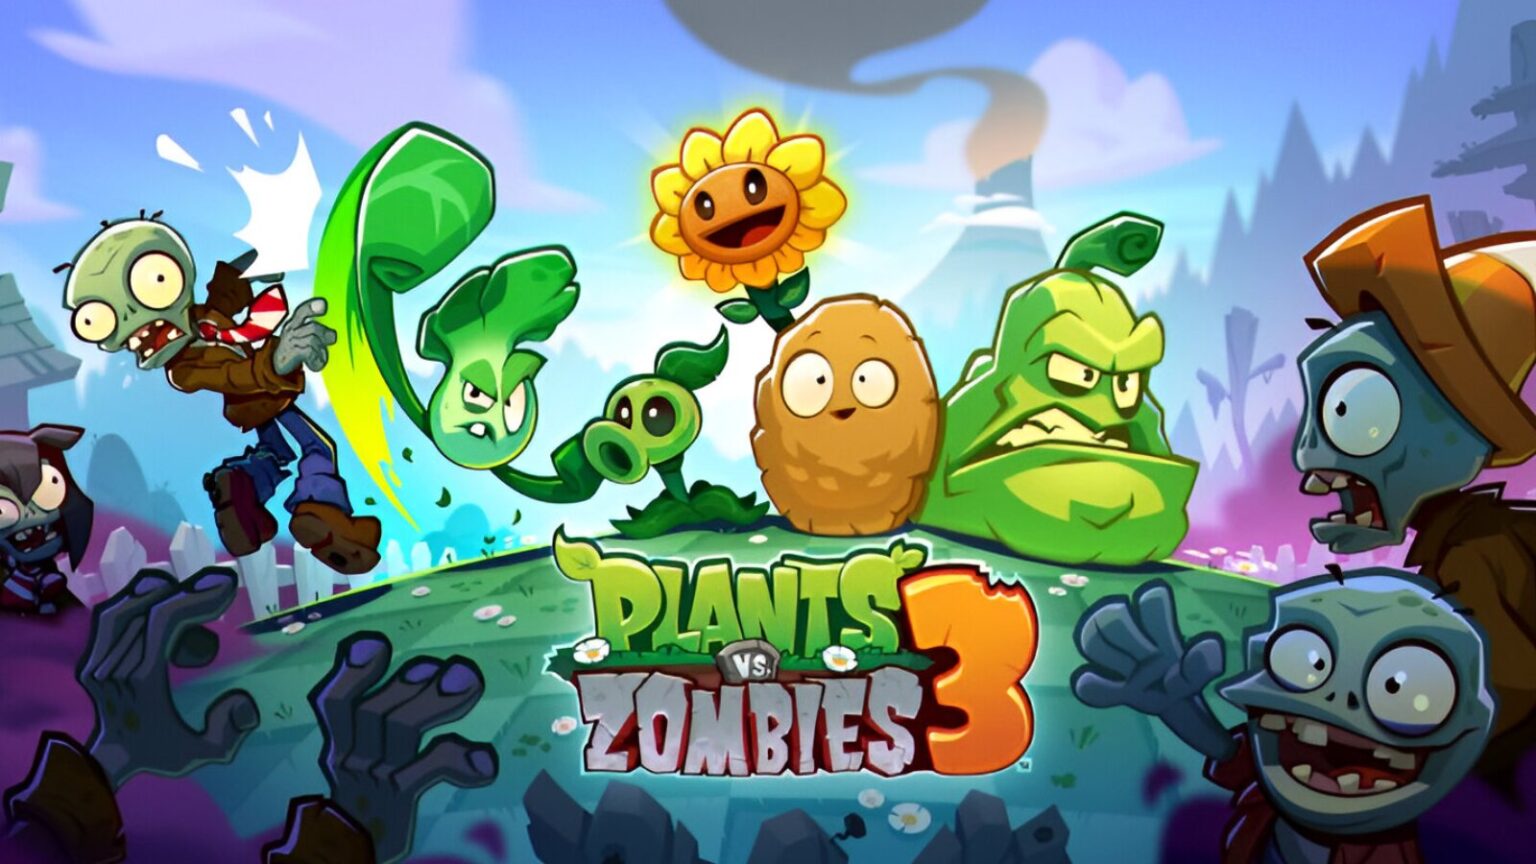 Plants vs Zombies, Games